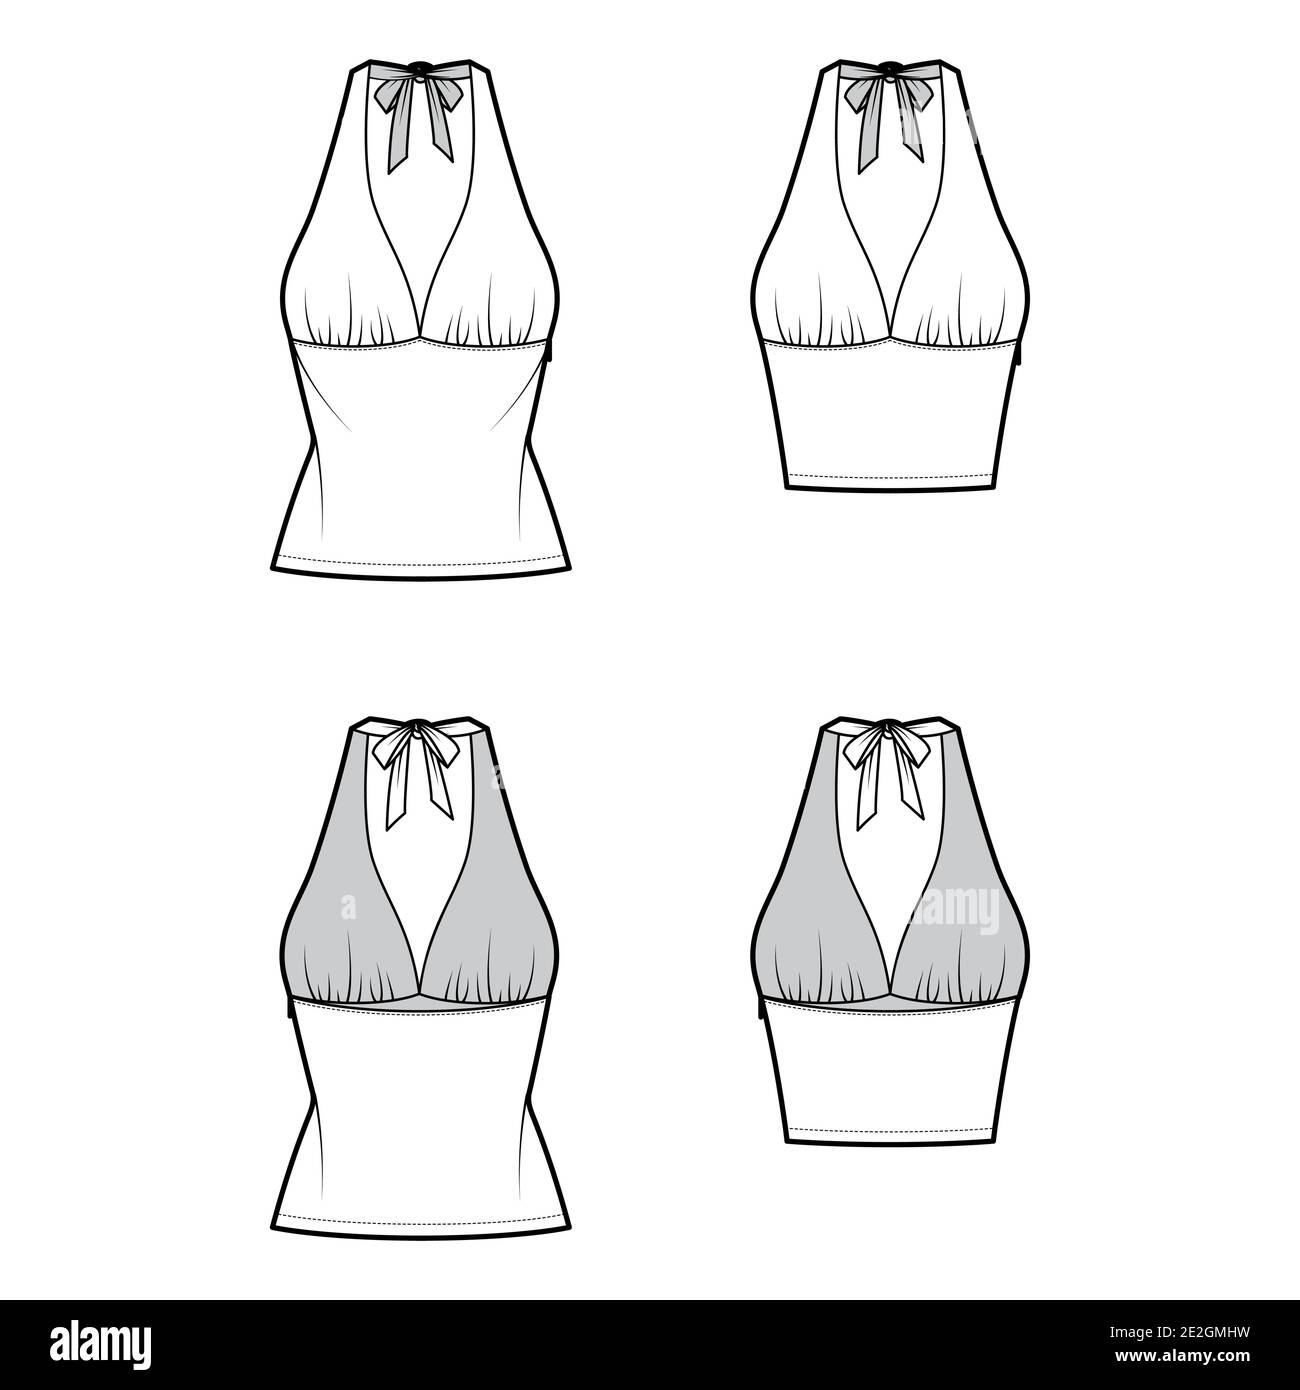 Empire waist shirt Stock Vector Images - Alamy